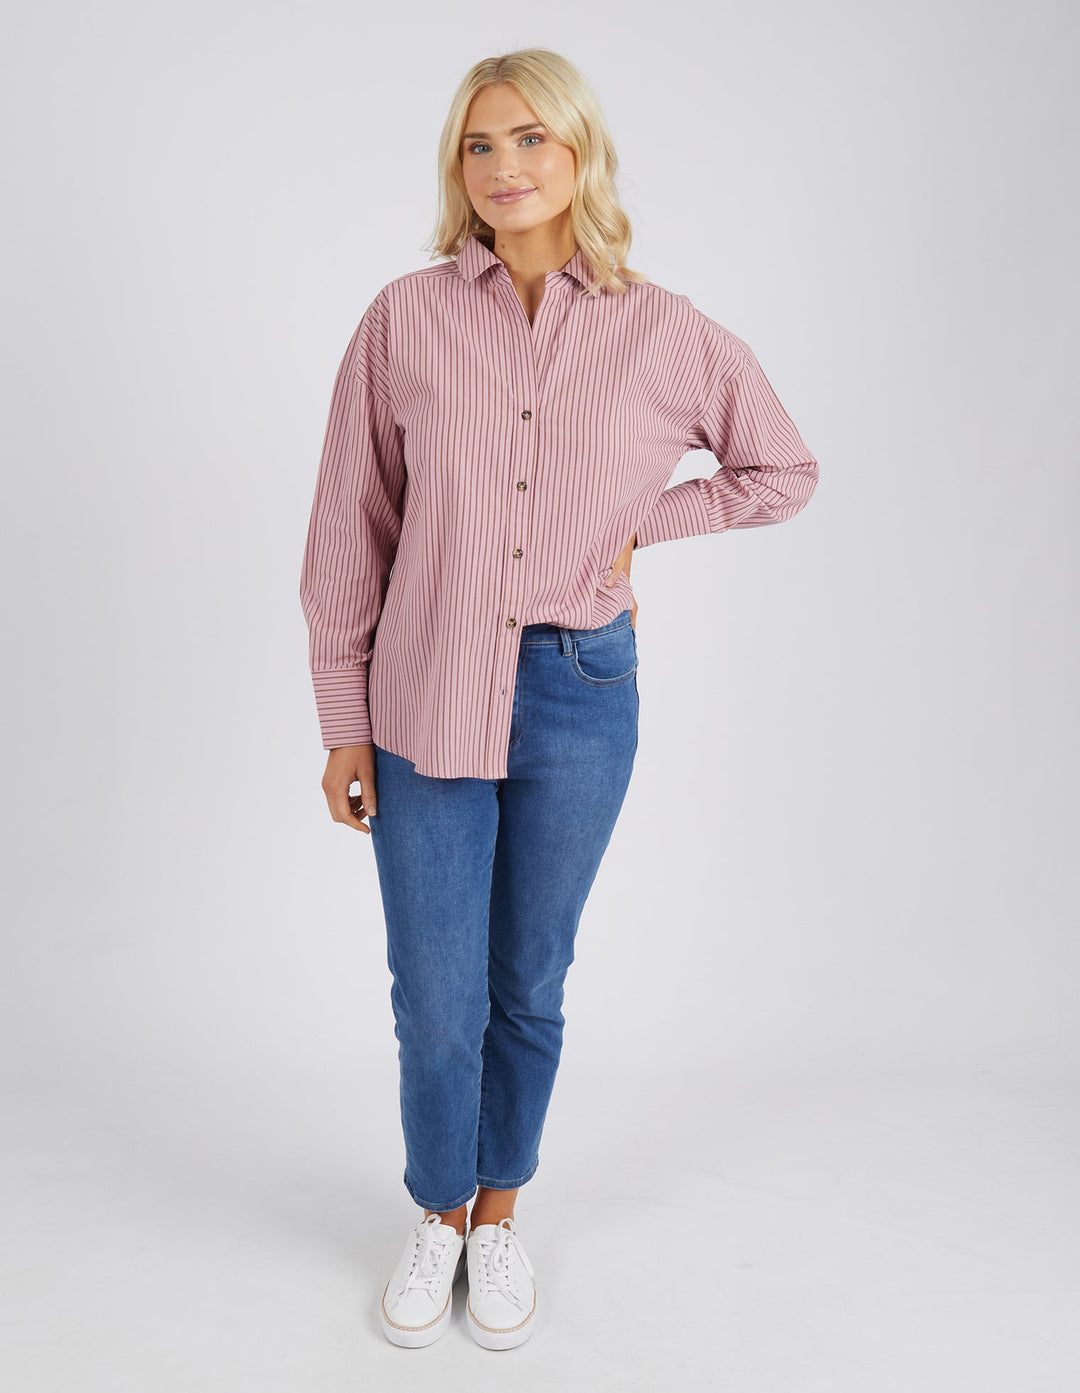 Elm Knitwear | Antonia Stripe Shirt - Dusty Pink/Chocolate | Shut the Front Door